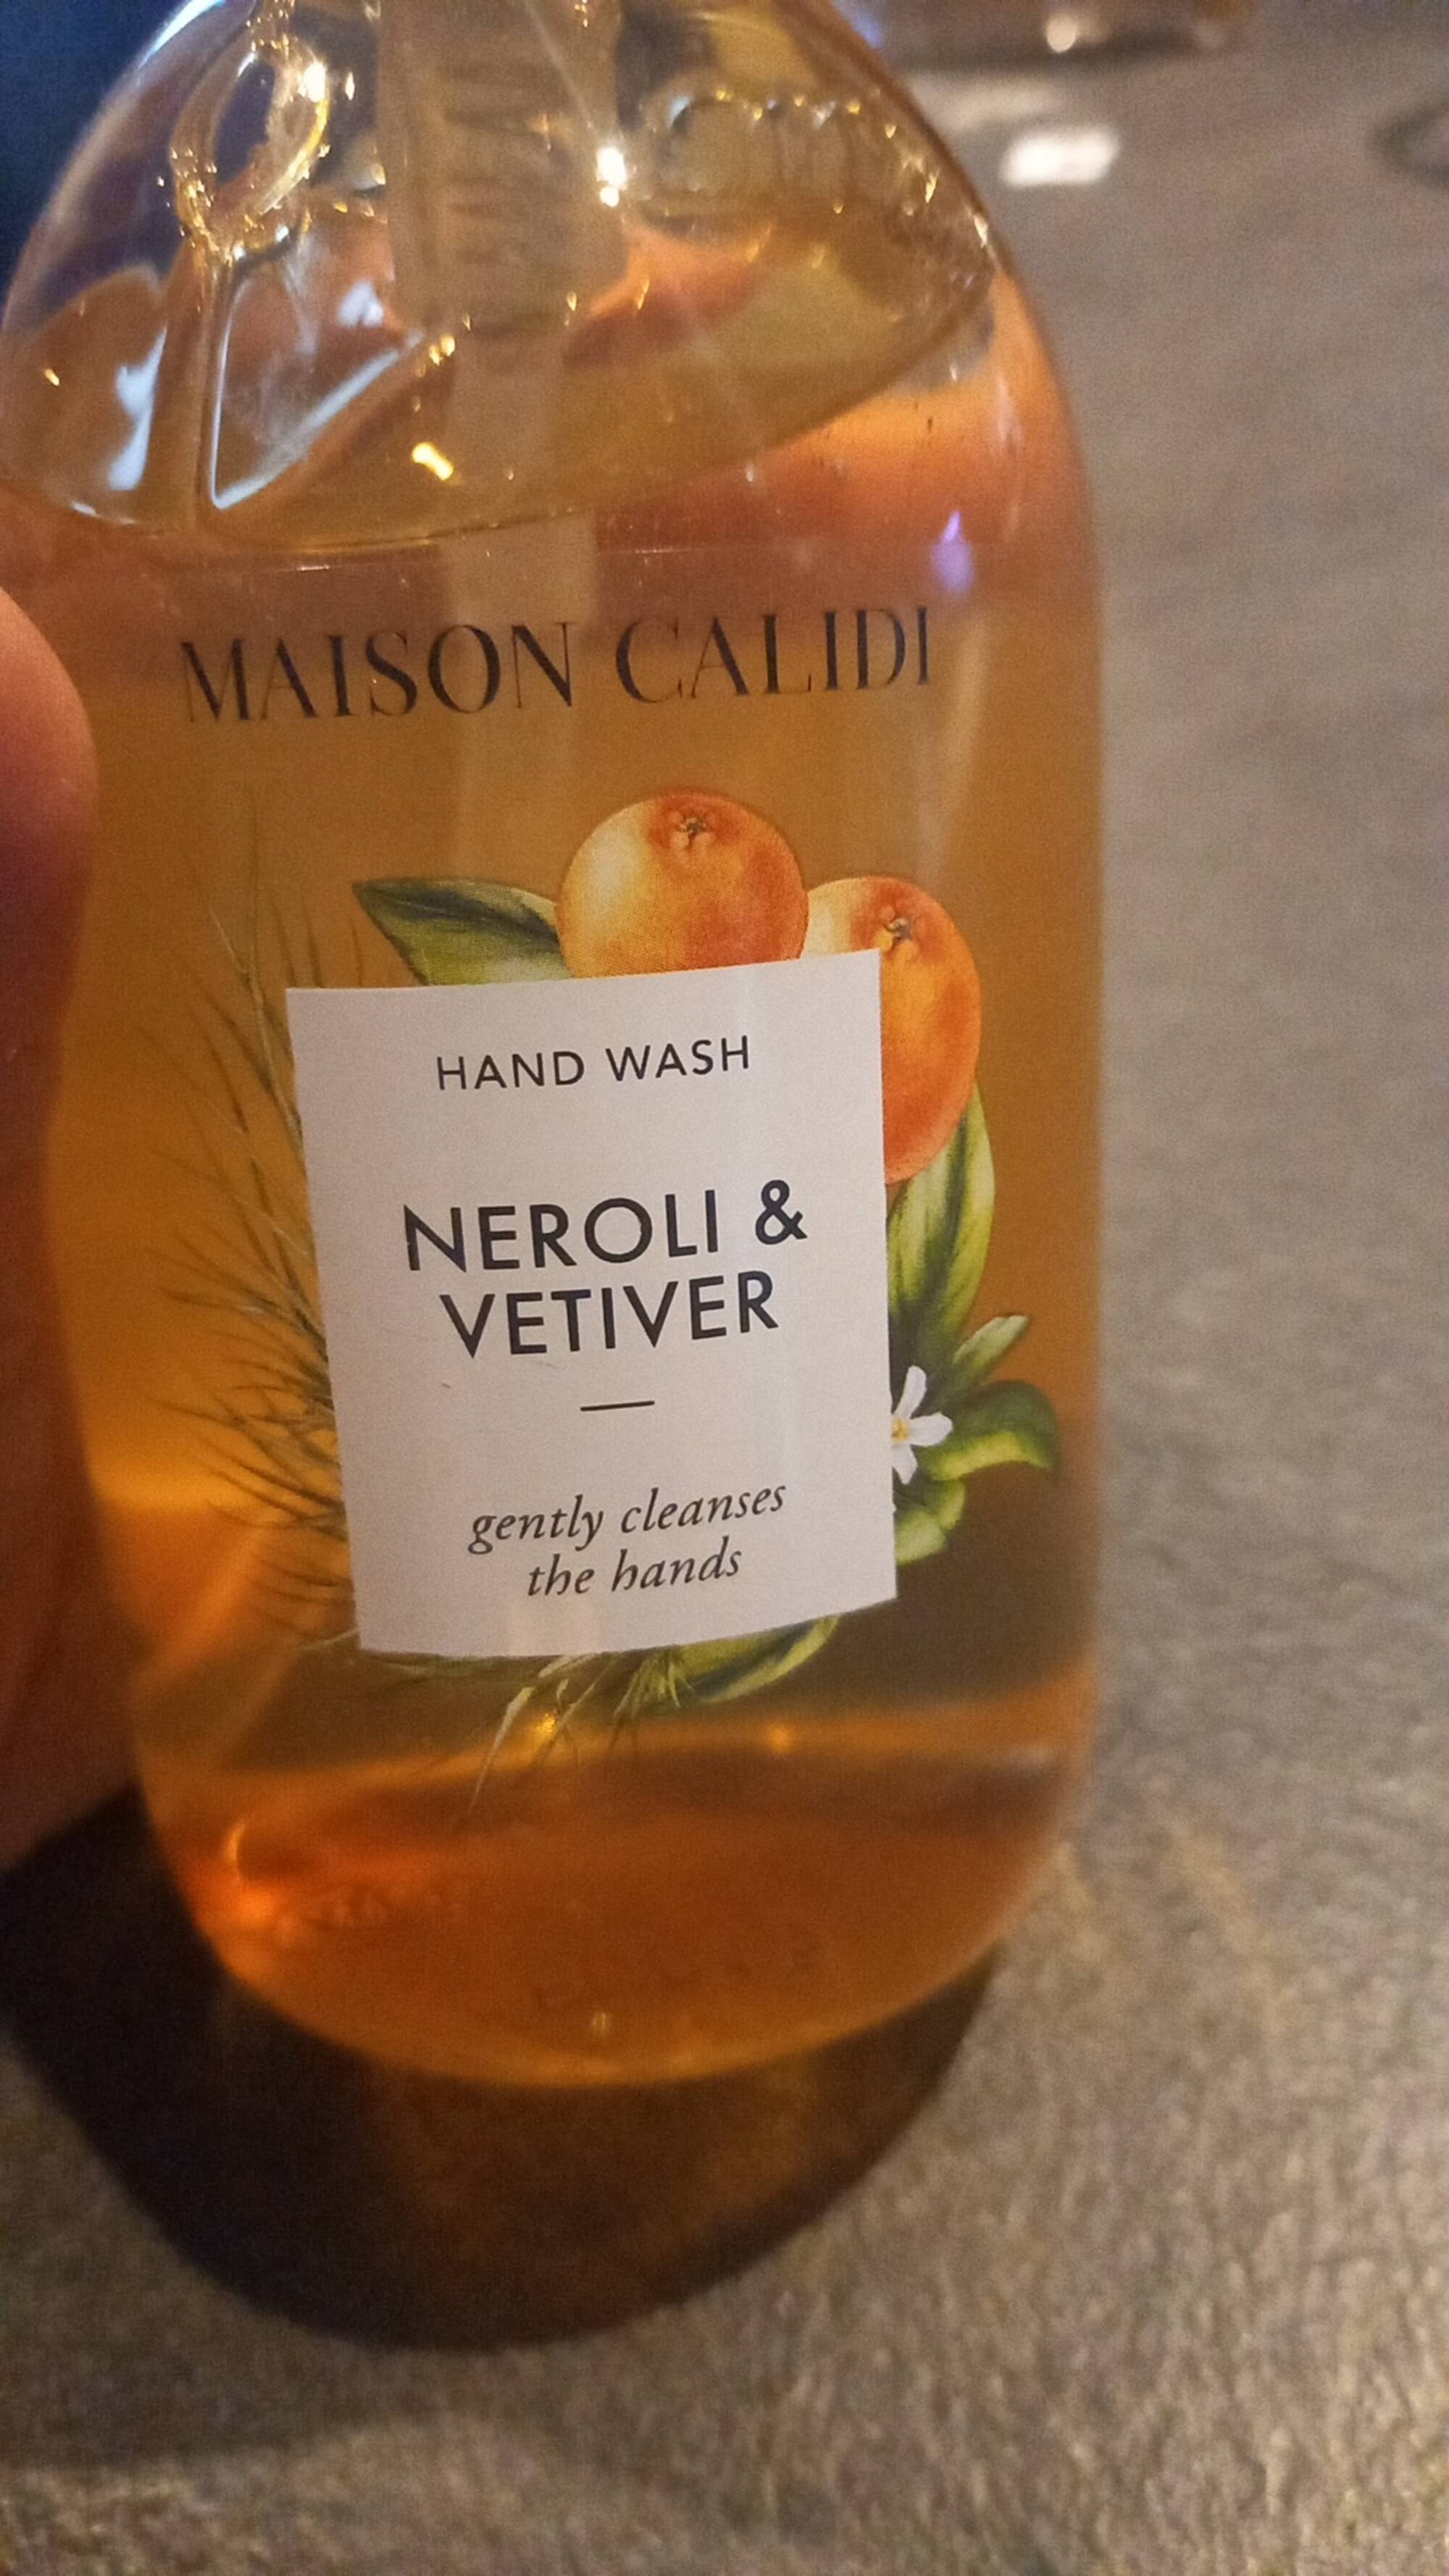 MAISON CALIDI - Hand wash neroli & vetiver